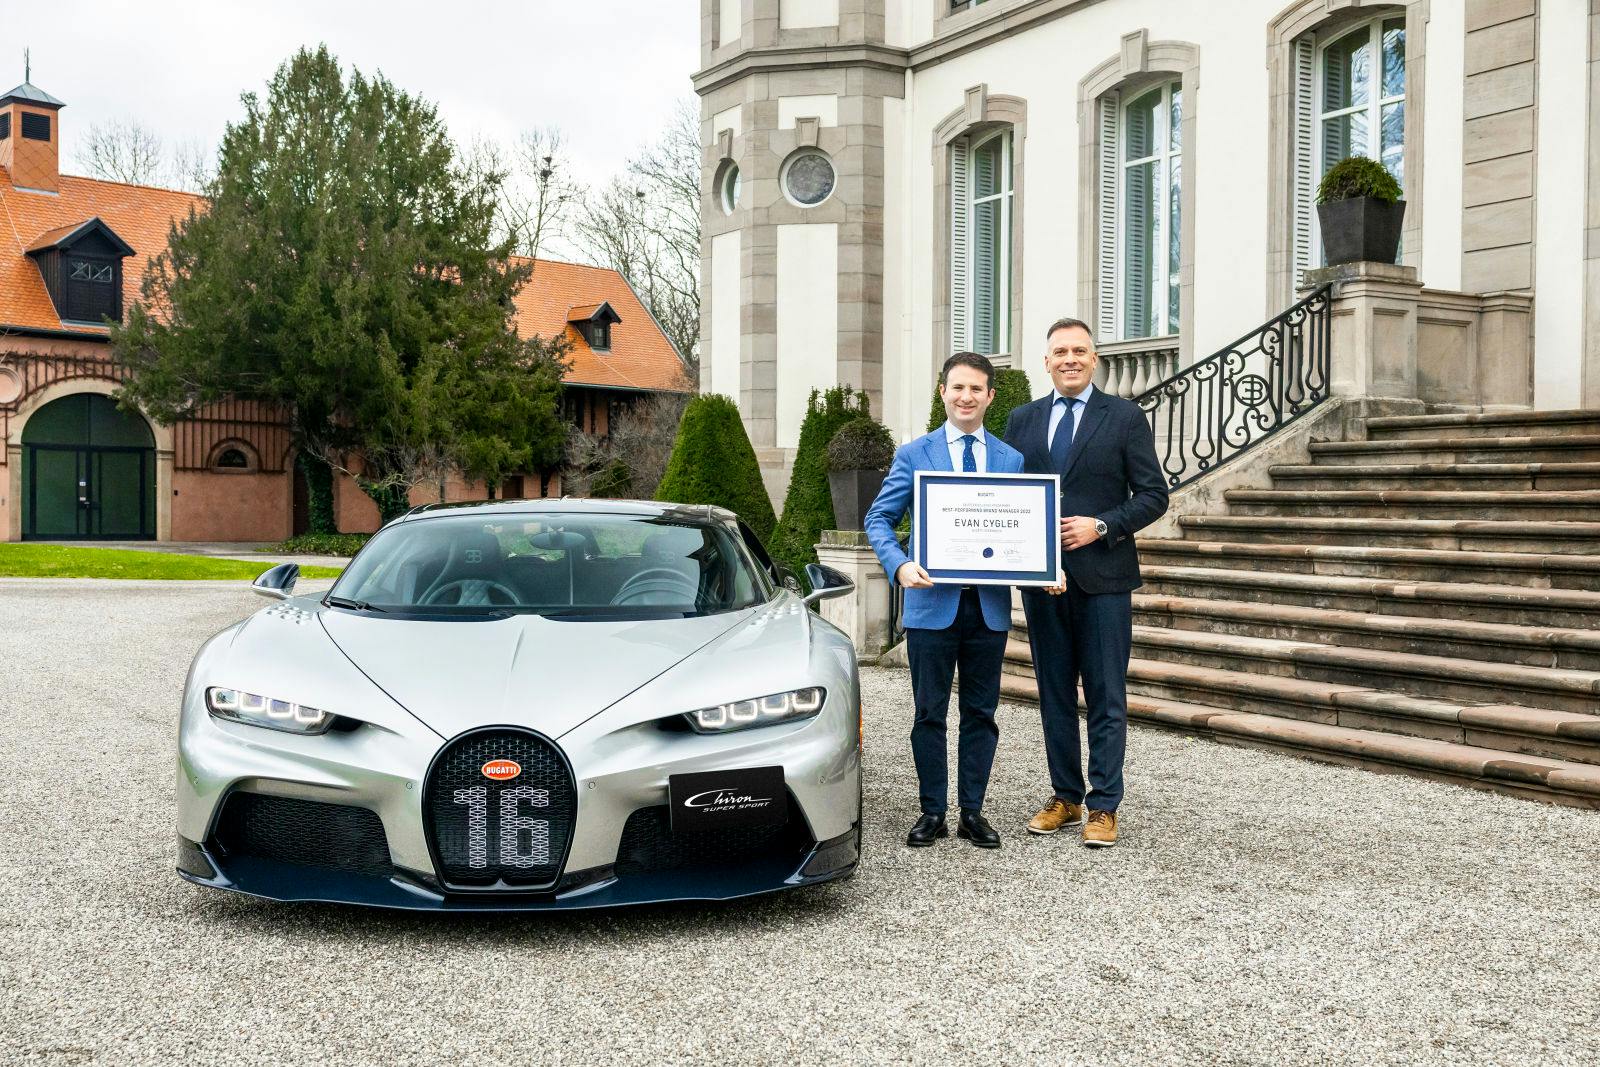 Hendrik Malinowski, Managing Director of Bugatti, salutes Evan Cygler's commitment and dedication to the brand.